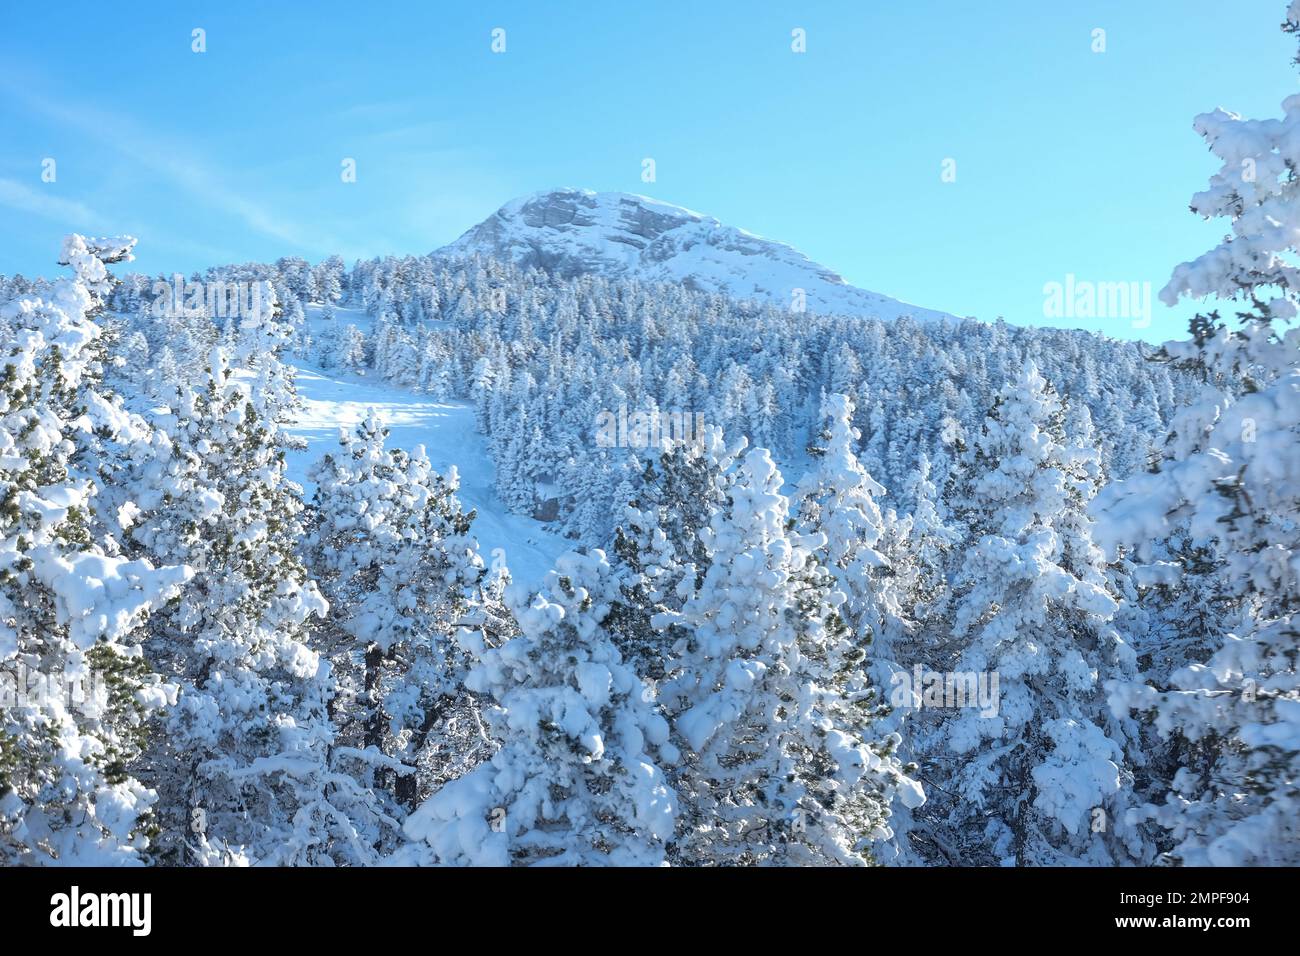 Michael Bunel / Le Pictorium -  Skiing in the Alps -  8/1/2016  -  Savoie / France / La plagne  -  Snow-covered fir trees under a blue sky. 29 January Stock Photo